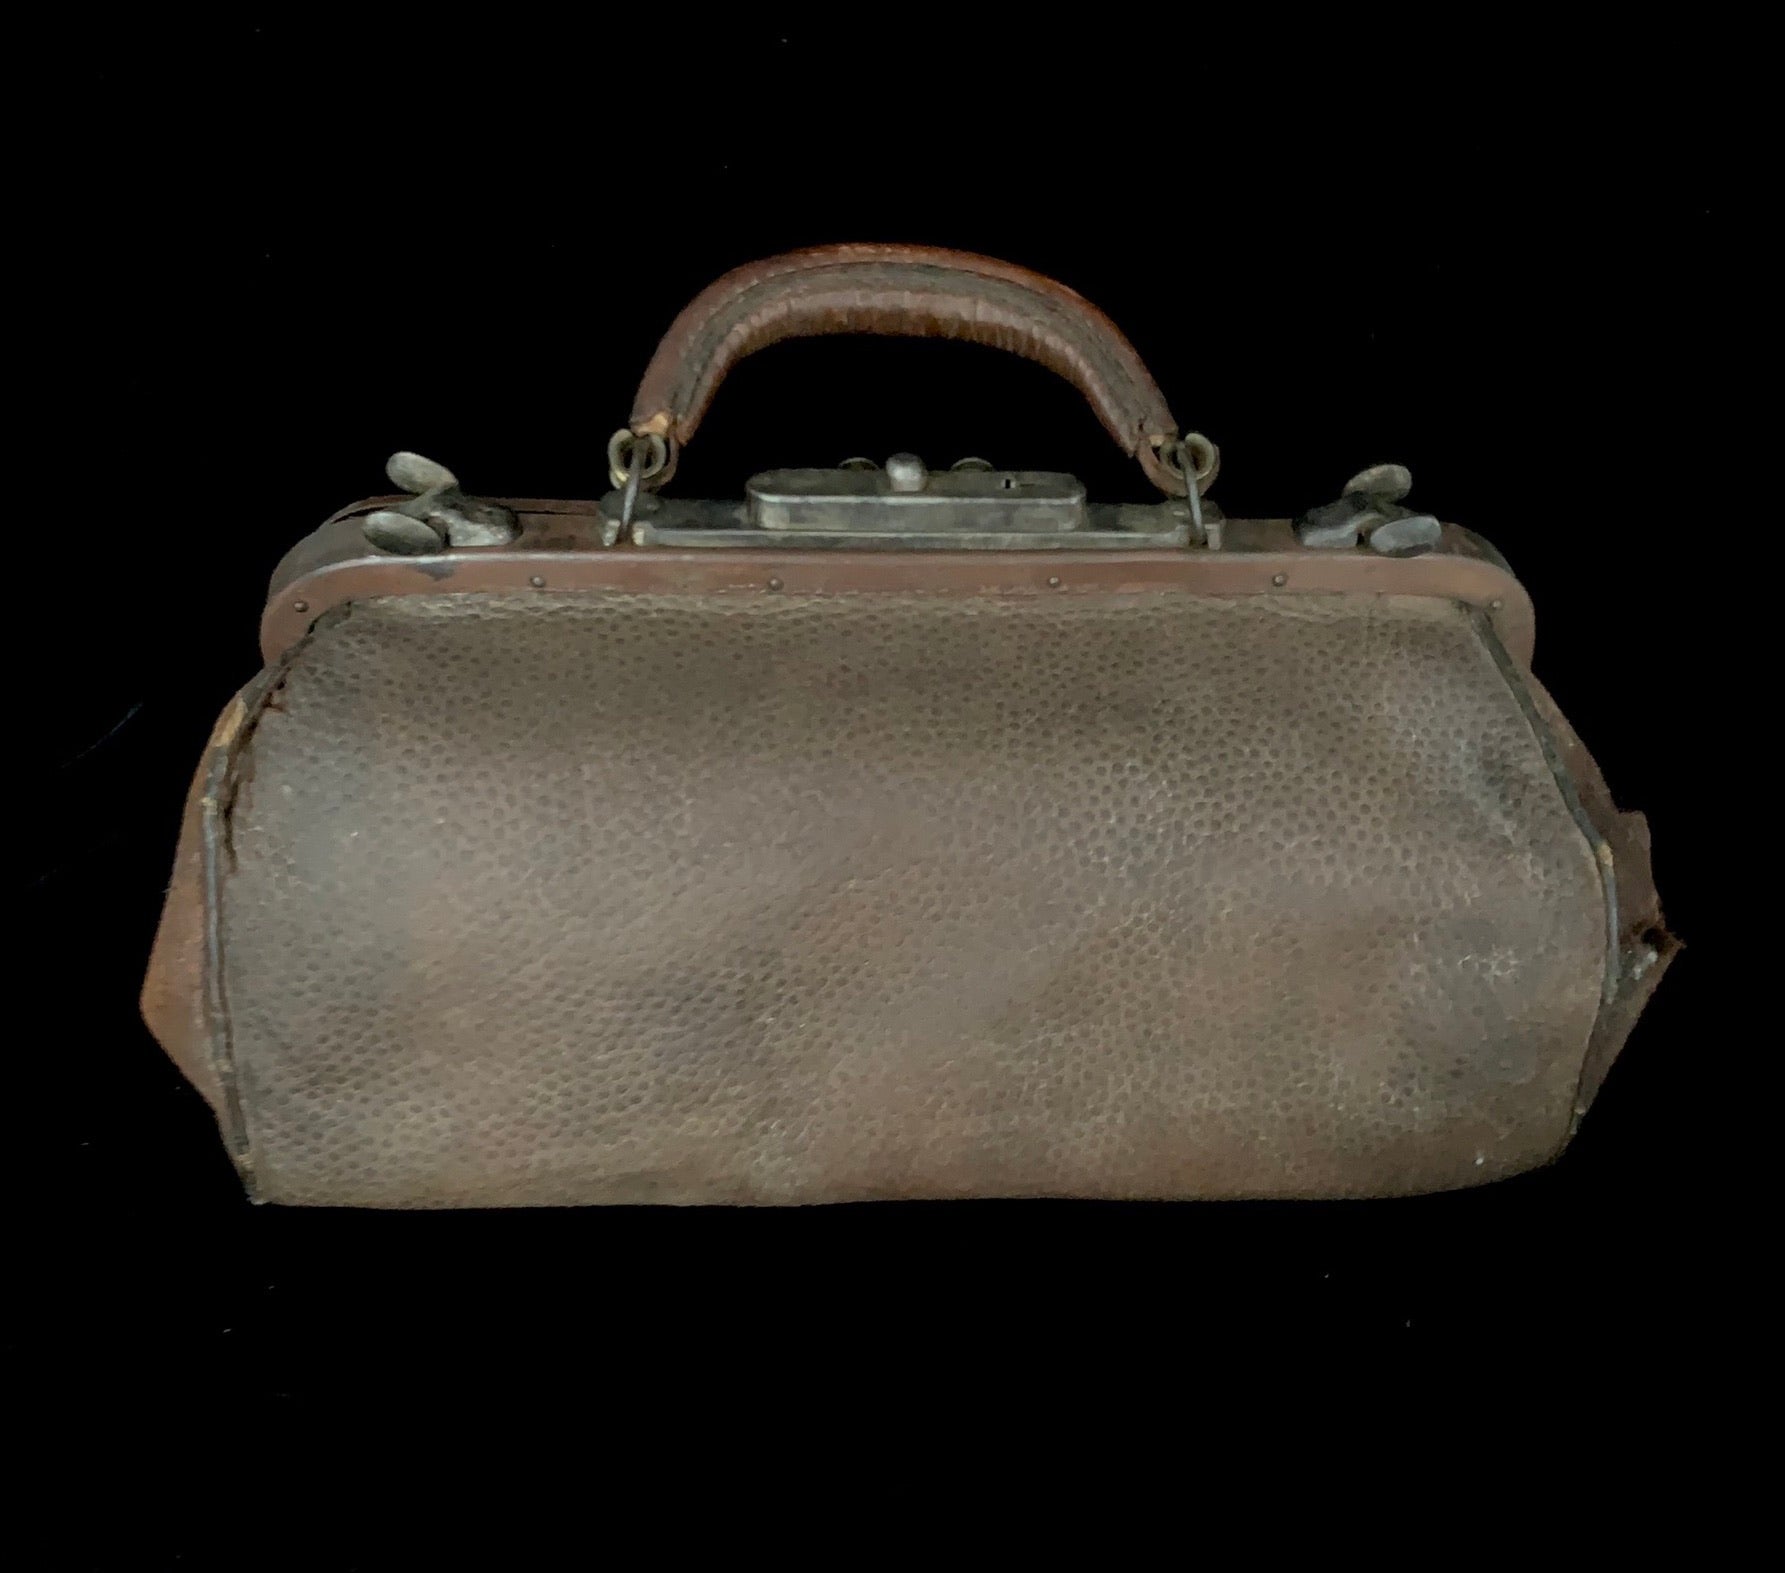 Antique 1800's Insane Asylum doctors medical bag by MourningMarket, $299.00